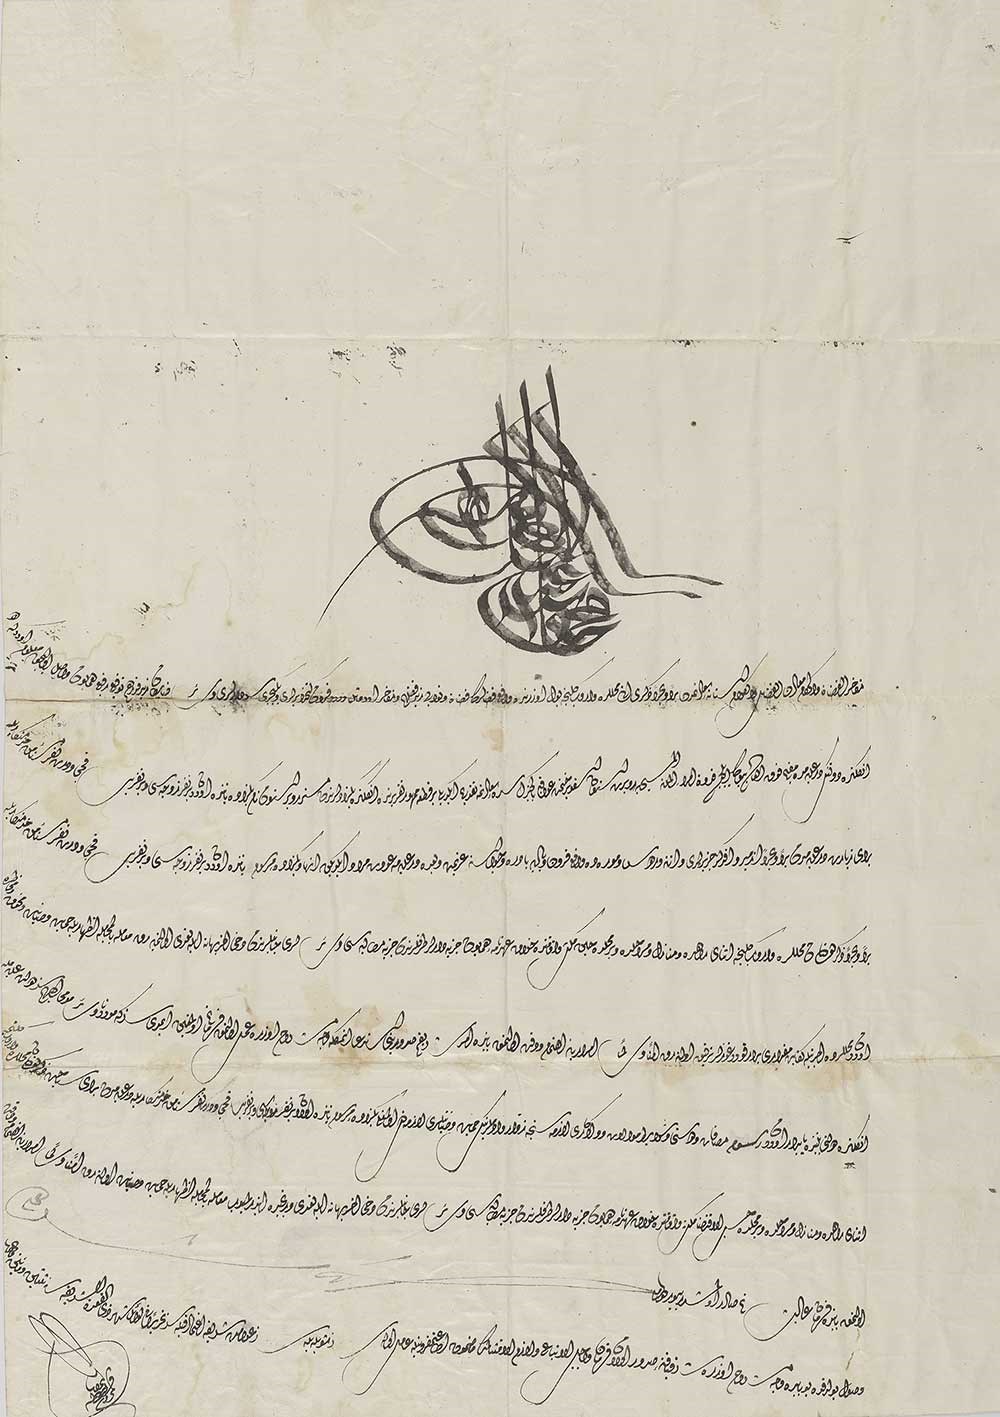 A handwritten manuscript in Ottoman Turkish